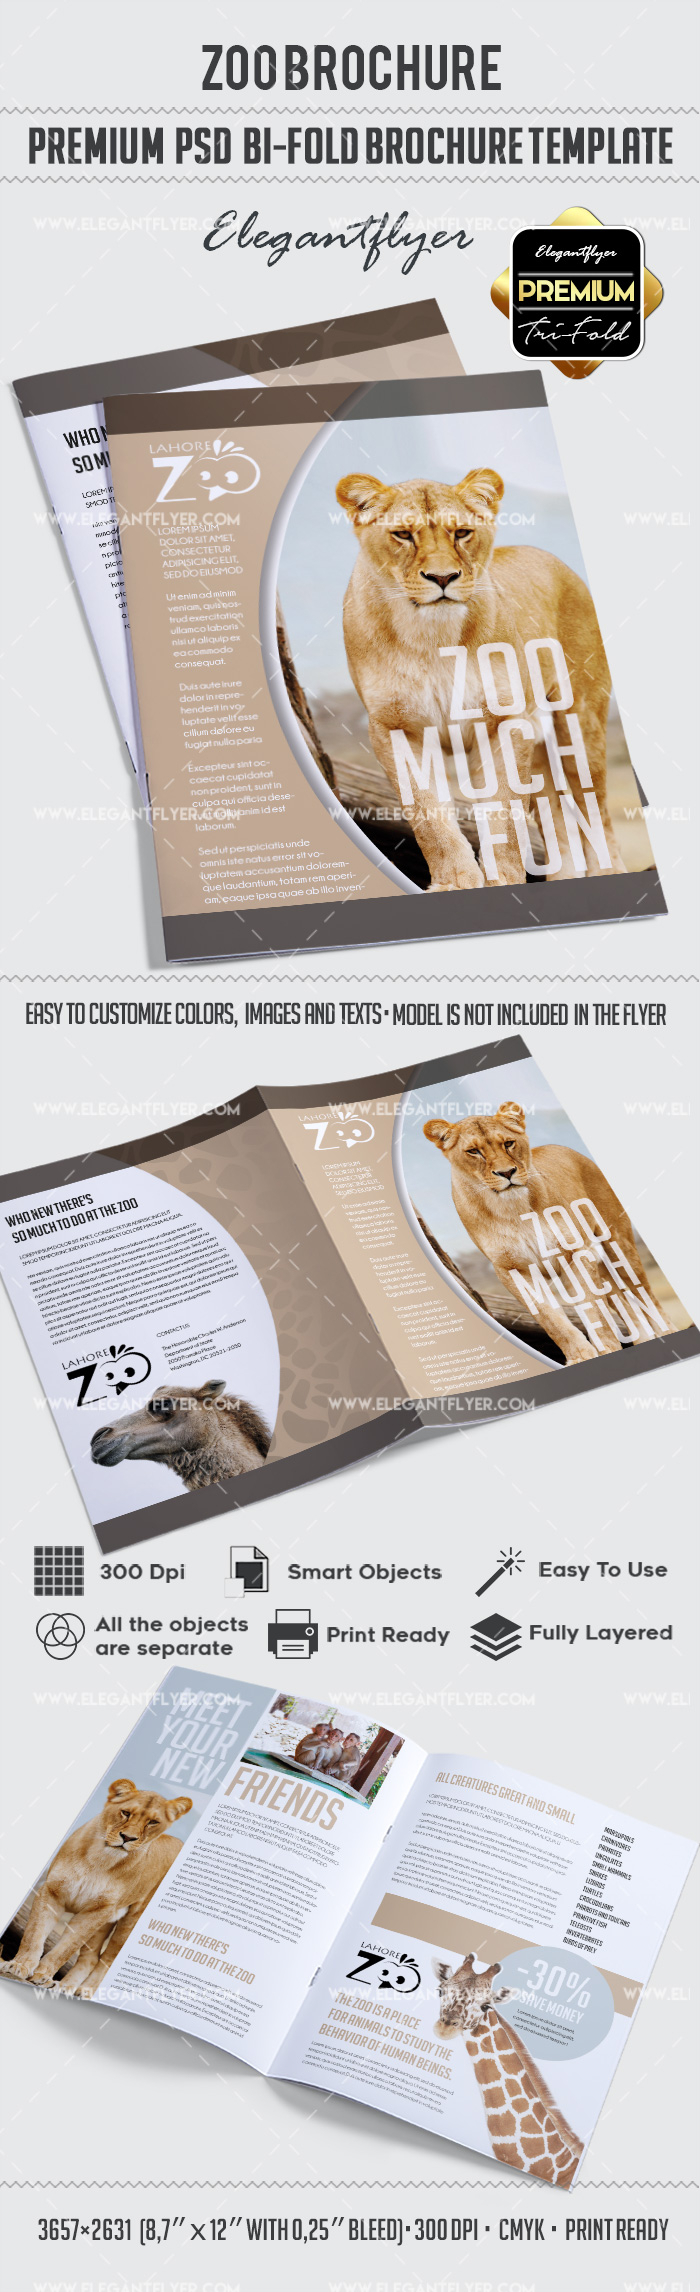 Zoo – Premium Bi Fold Psd Brochure Template Within Zoo Brochure Template